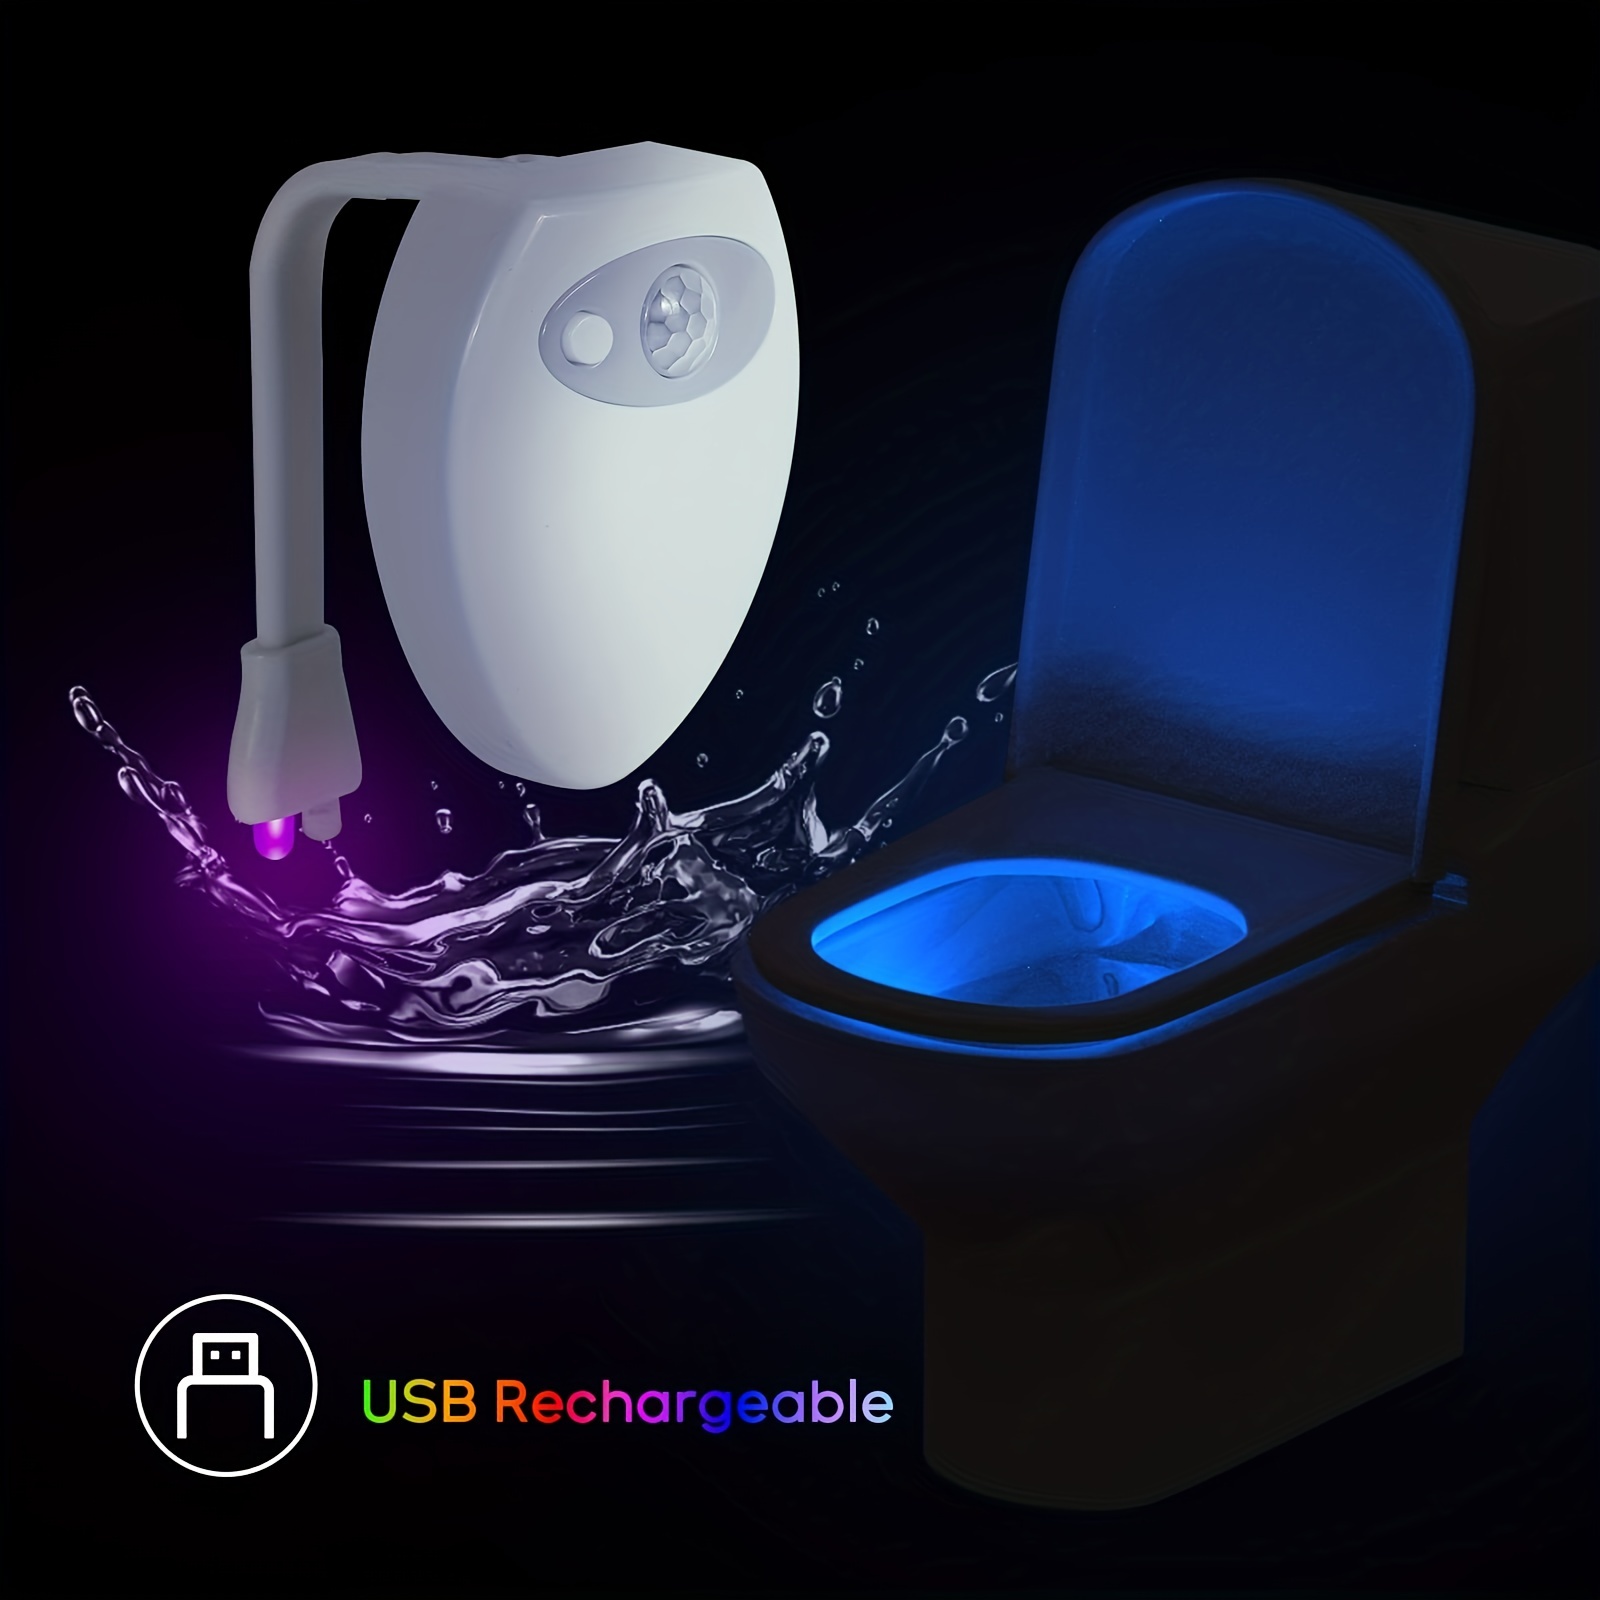 1pc Toilet Motion Sensor Night Light, 16 Color Bathroom